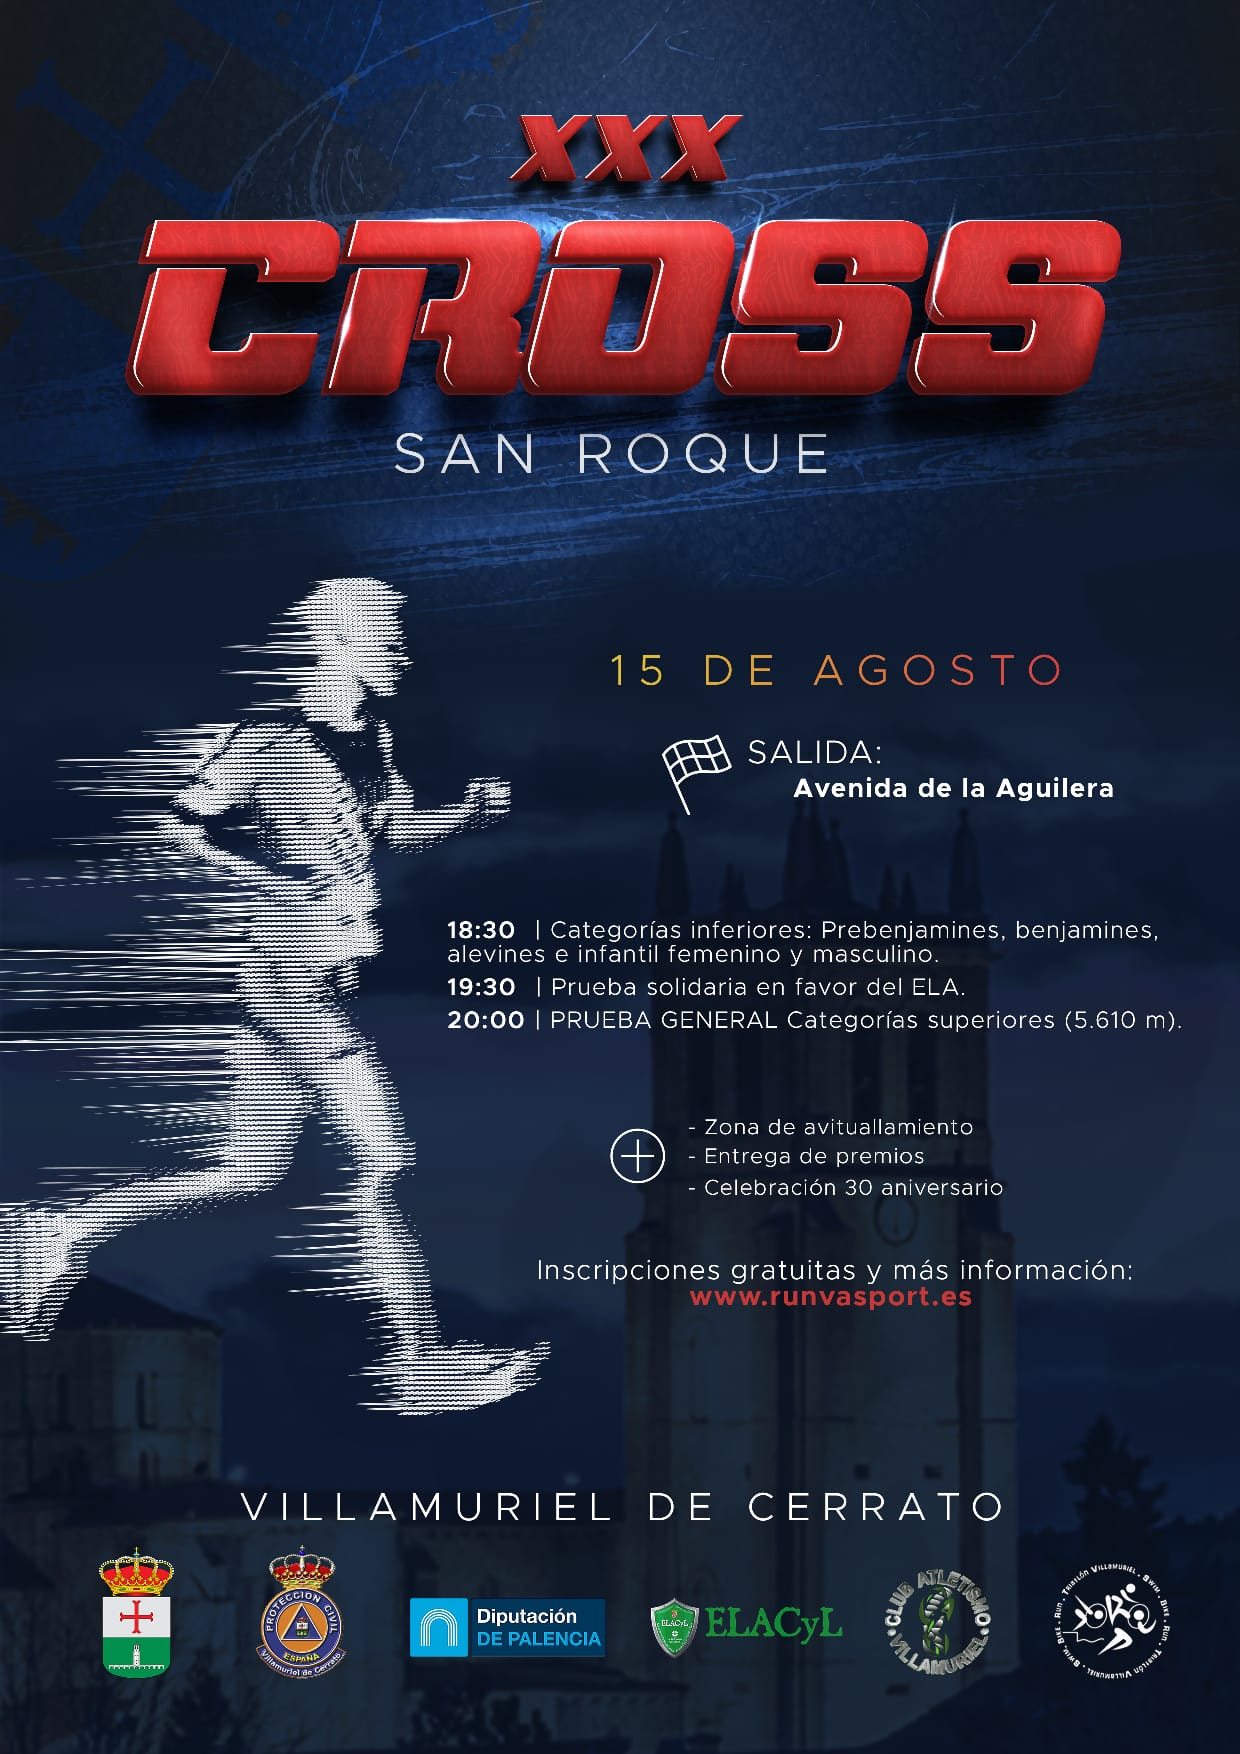 XXX CROSS SAN ROQUE - VILLAMURIEL DE CERRATO - Inscríbete